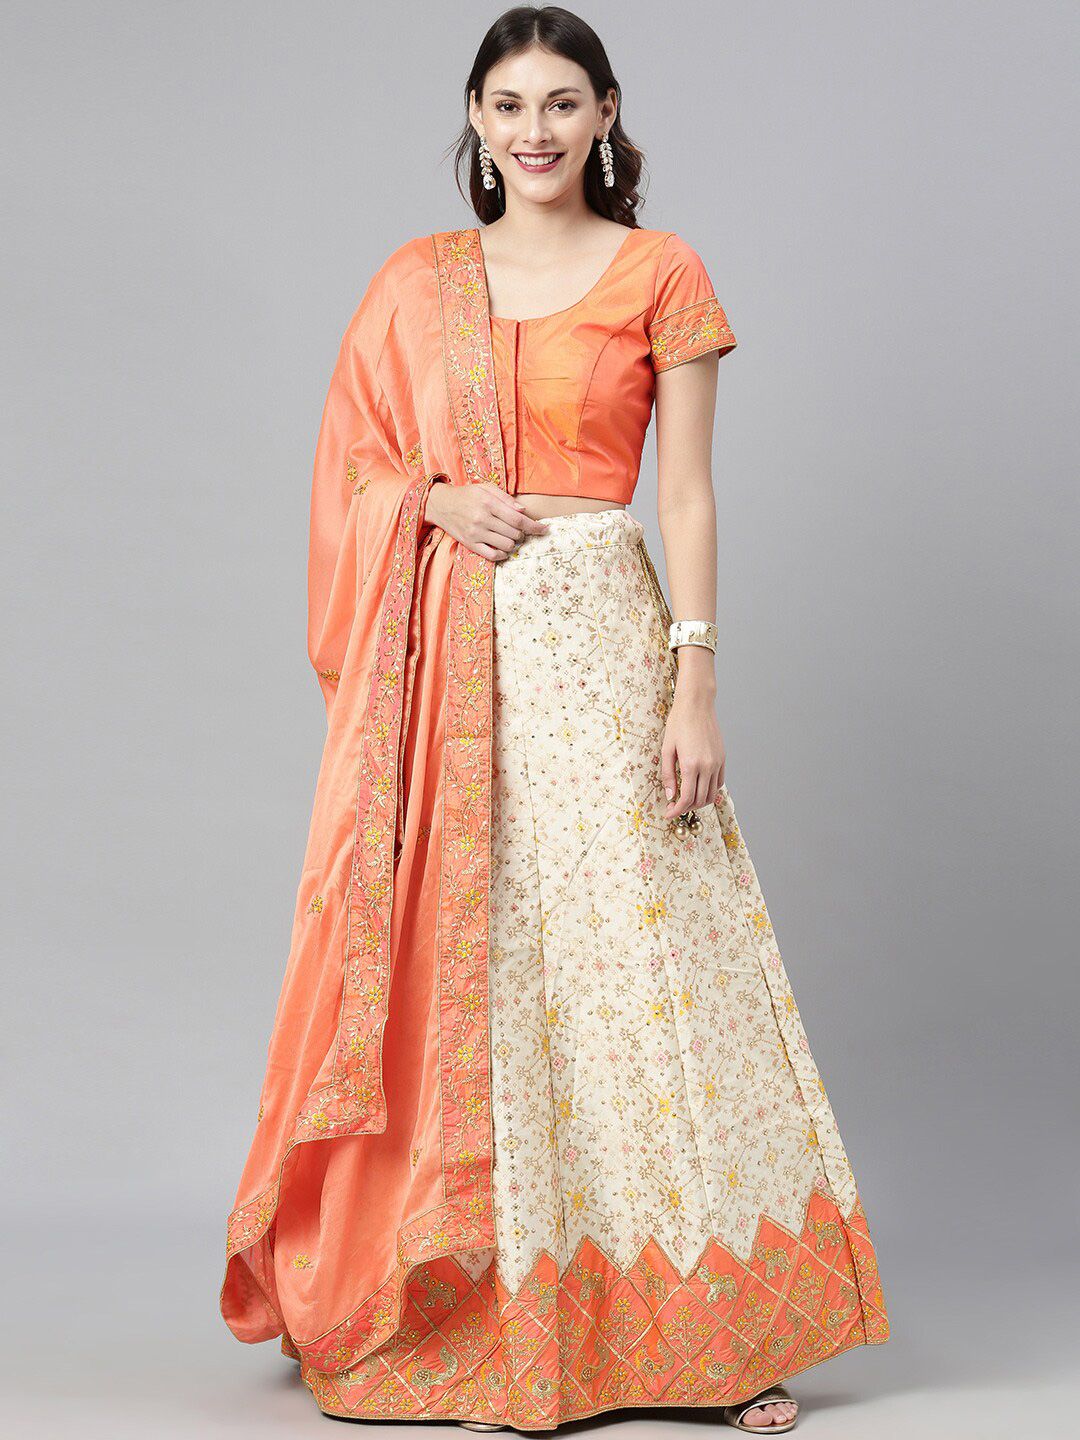 The Chennai Silks Beige & Orange Woven Designed Ready To Wear Lehenga Choli with Dupatta Price in India